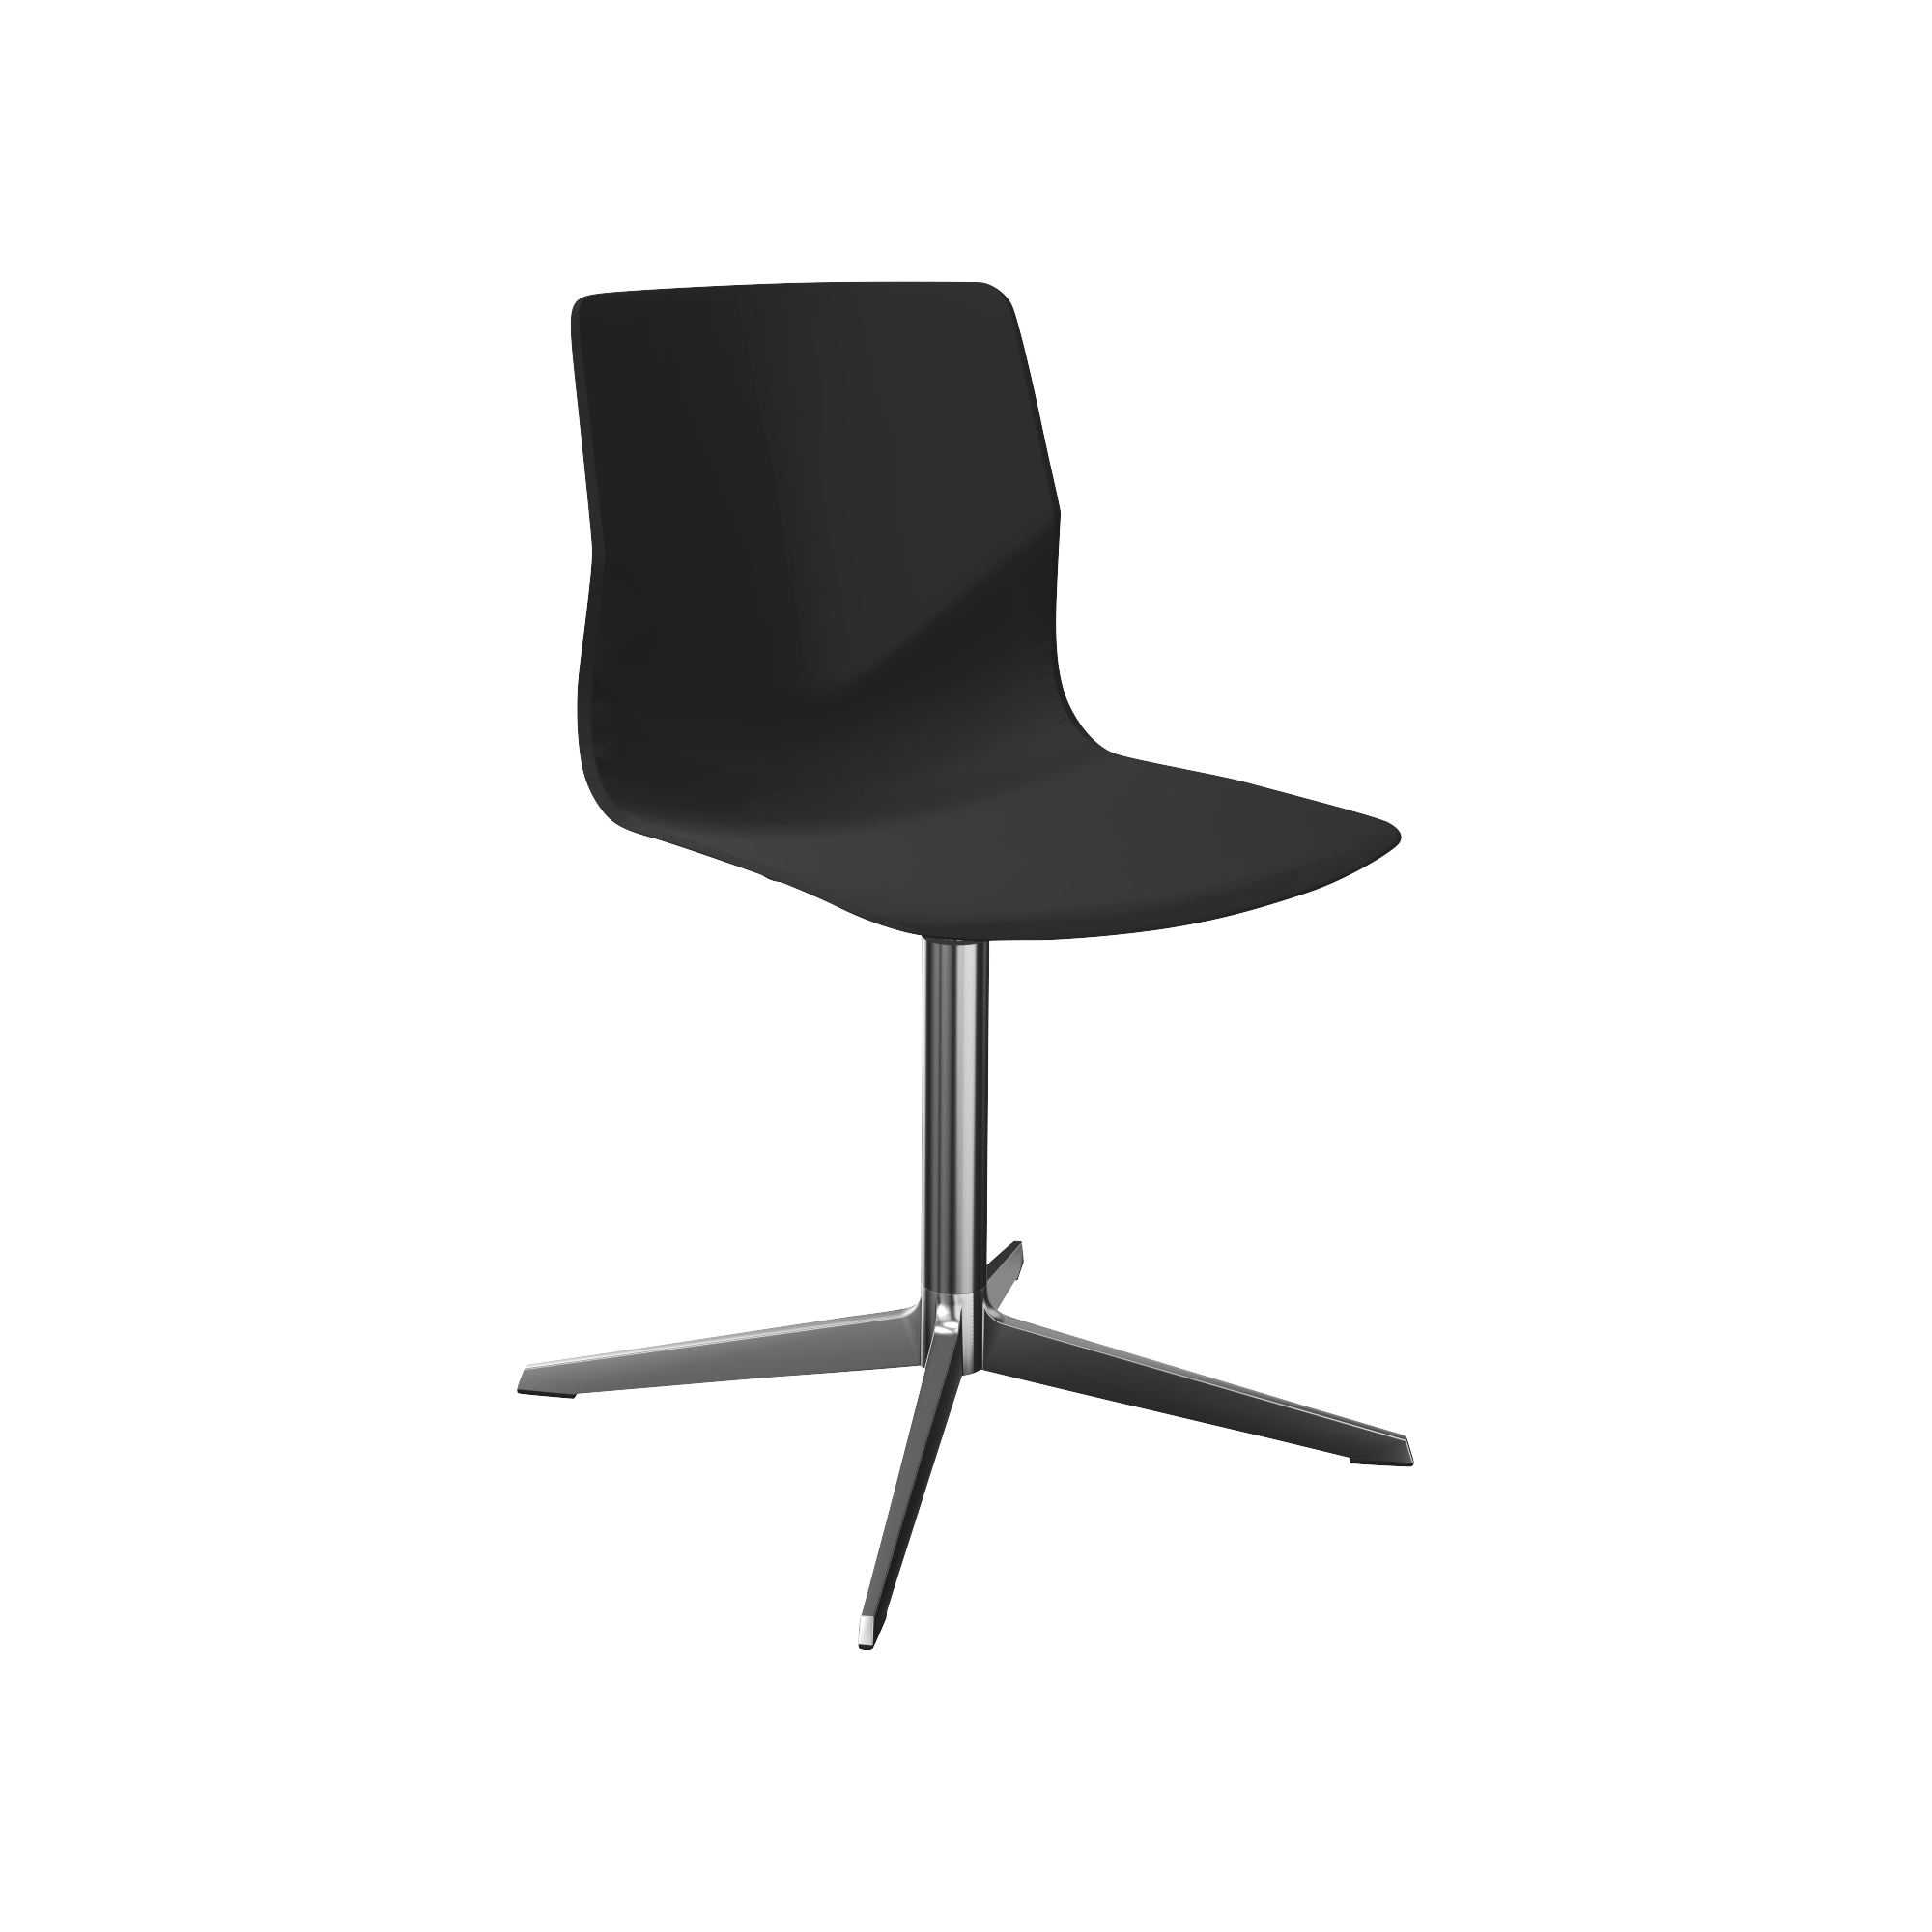 designer desk chair with metal leg